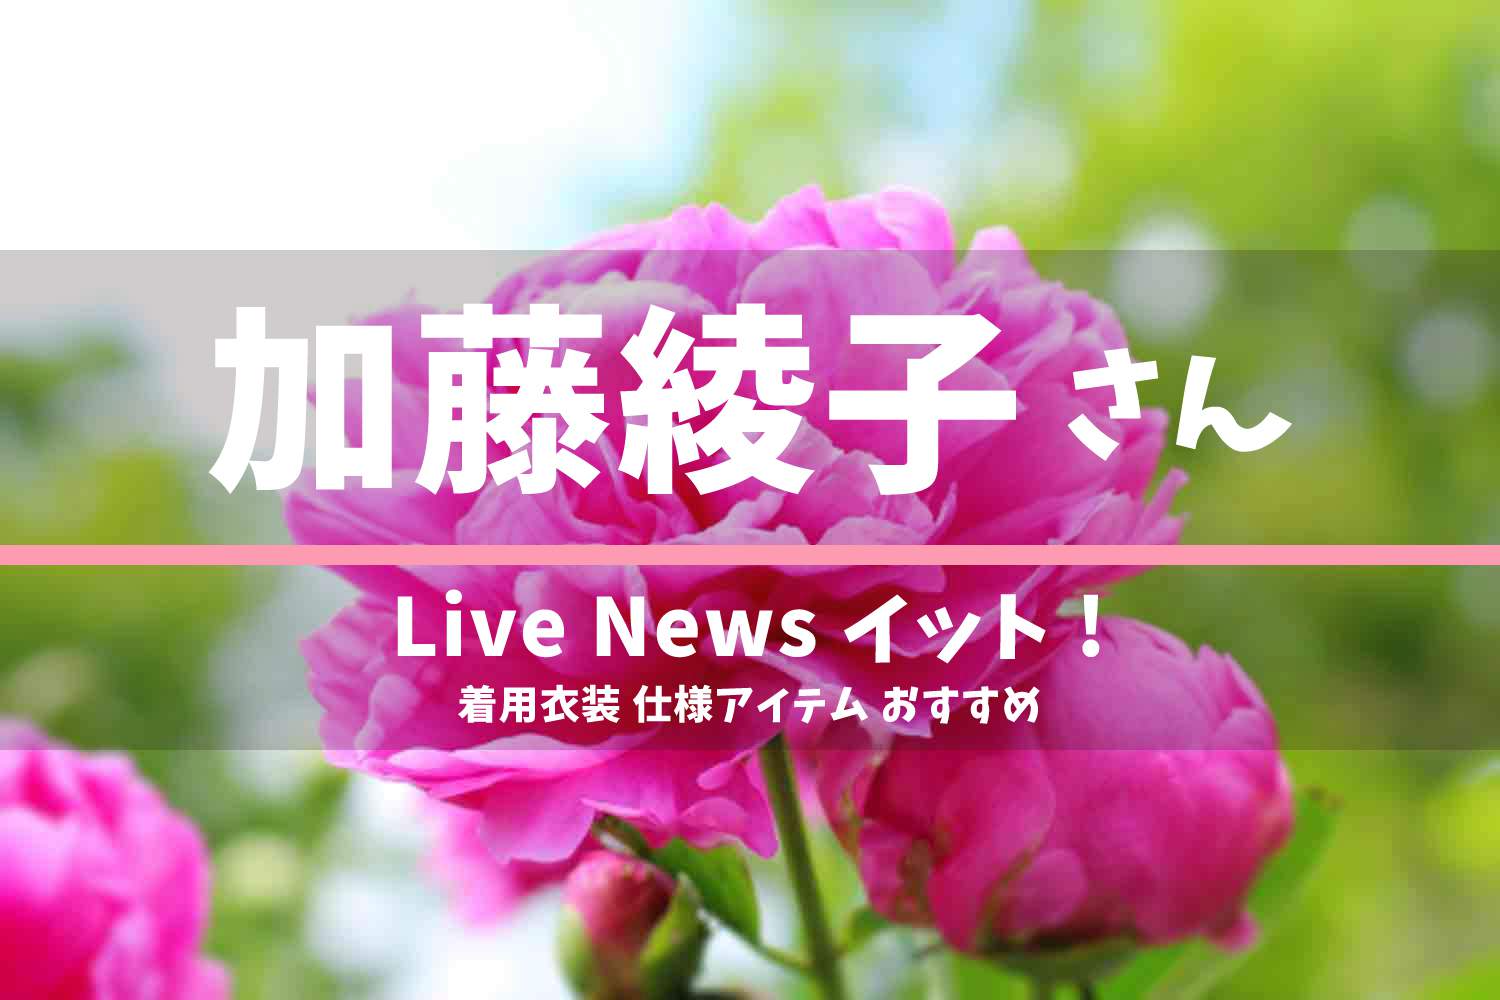 Live News イット! 加藤綾子さん 番組 衣装 2022年7月5日放送